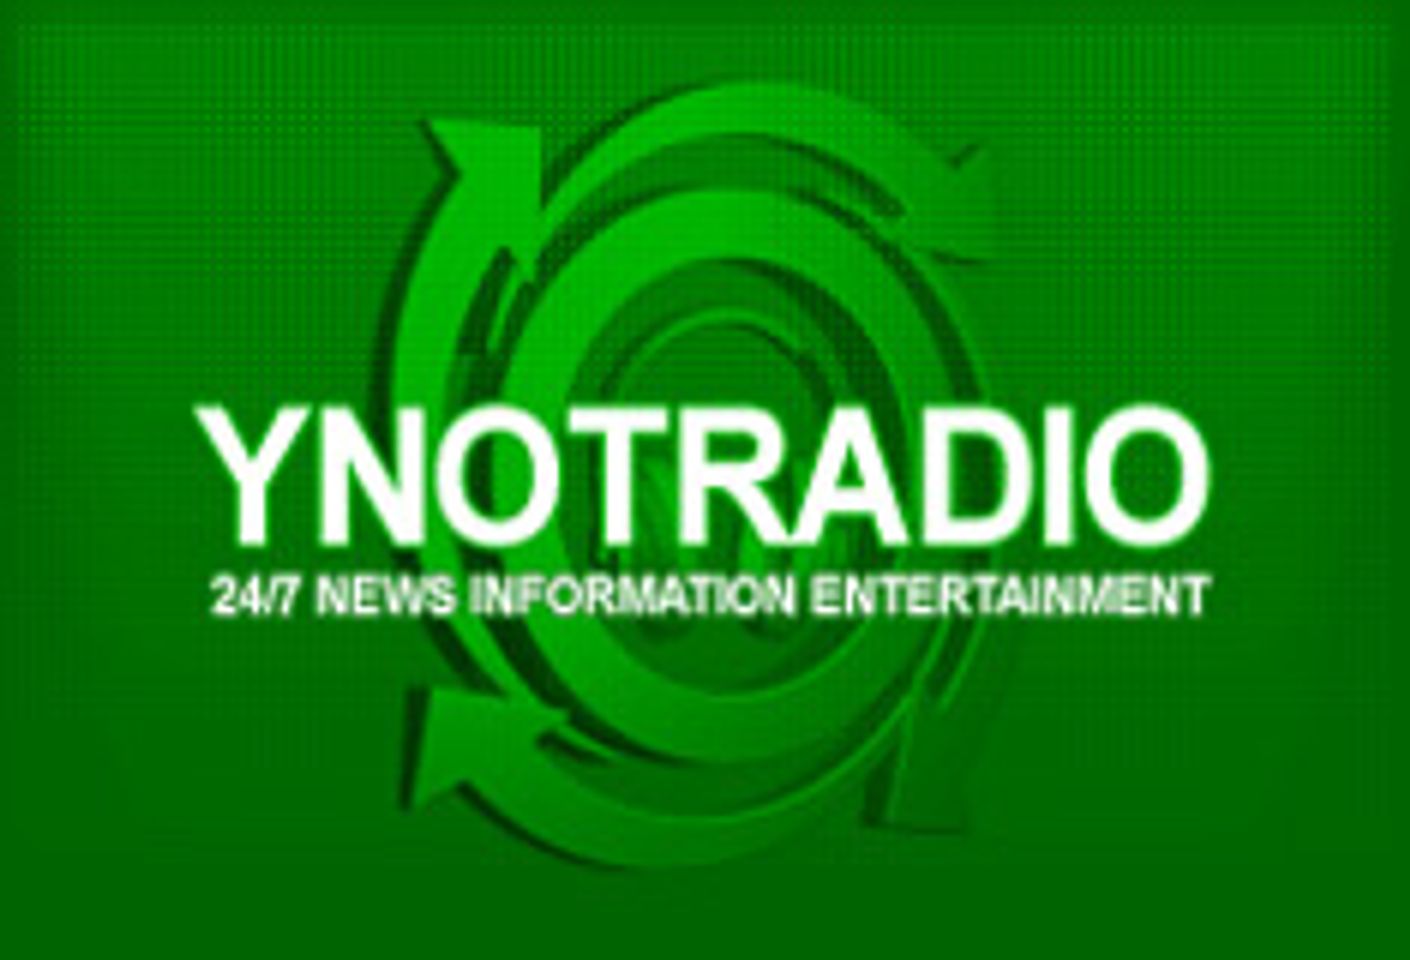 Porn Professors Returns to YNOT Radio Lineup